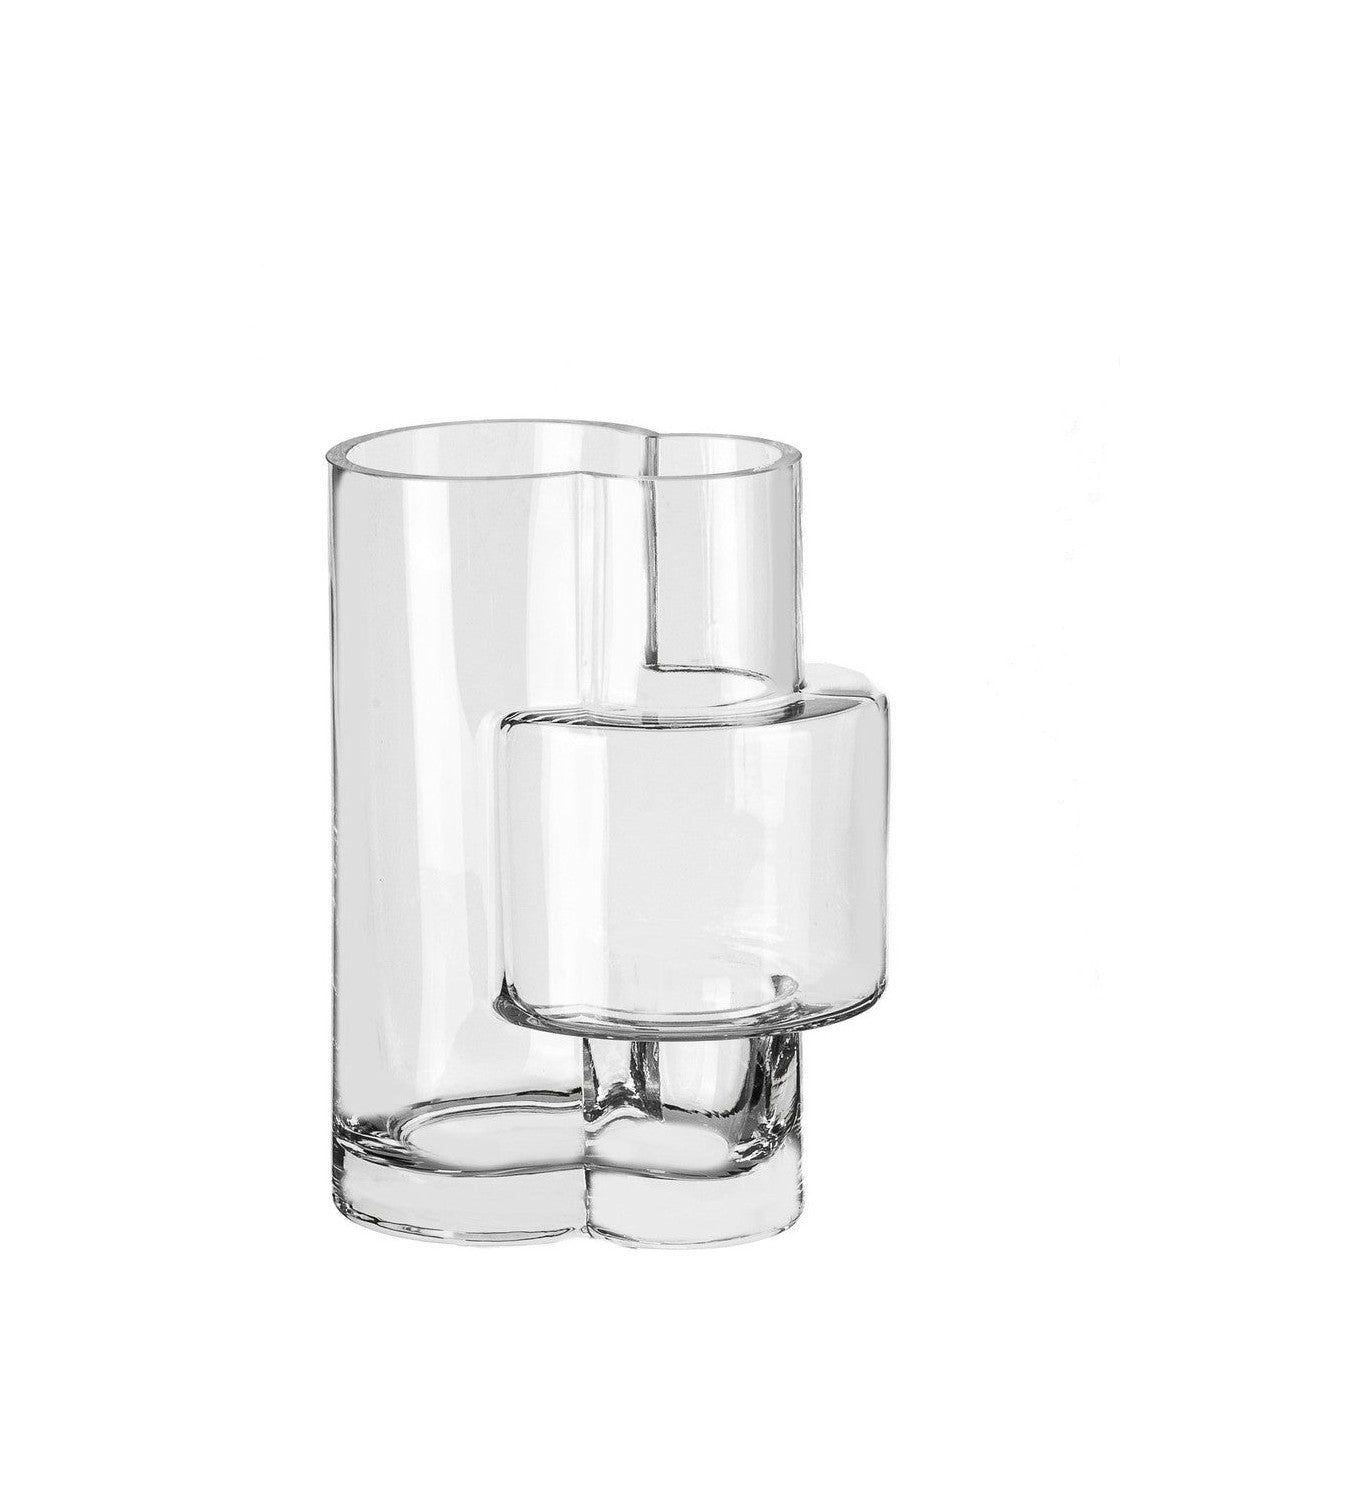 Constructivistische stijl moderne vaas, topontwerp, Fusio 25 Clear Glass